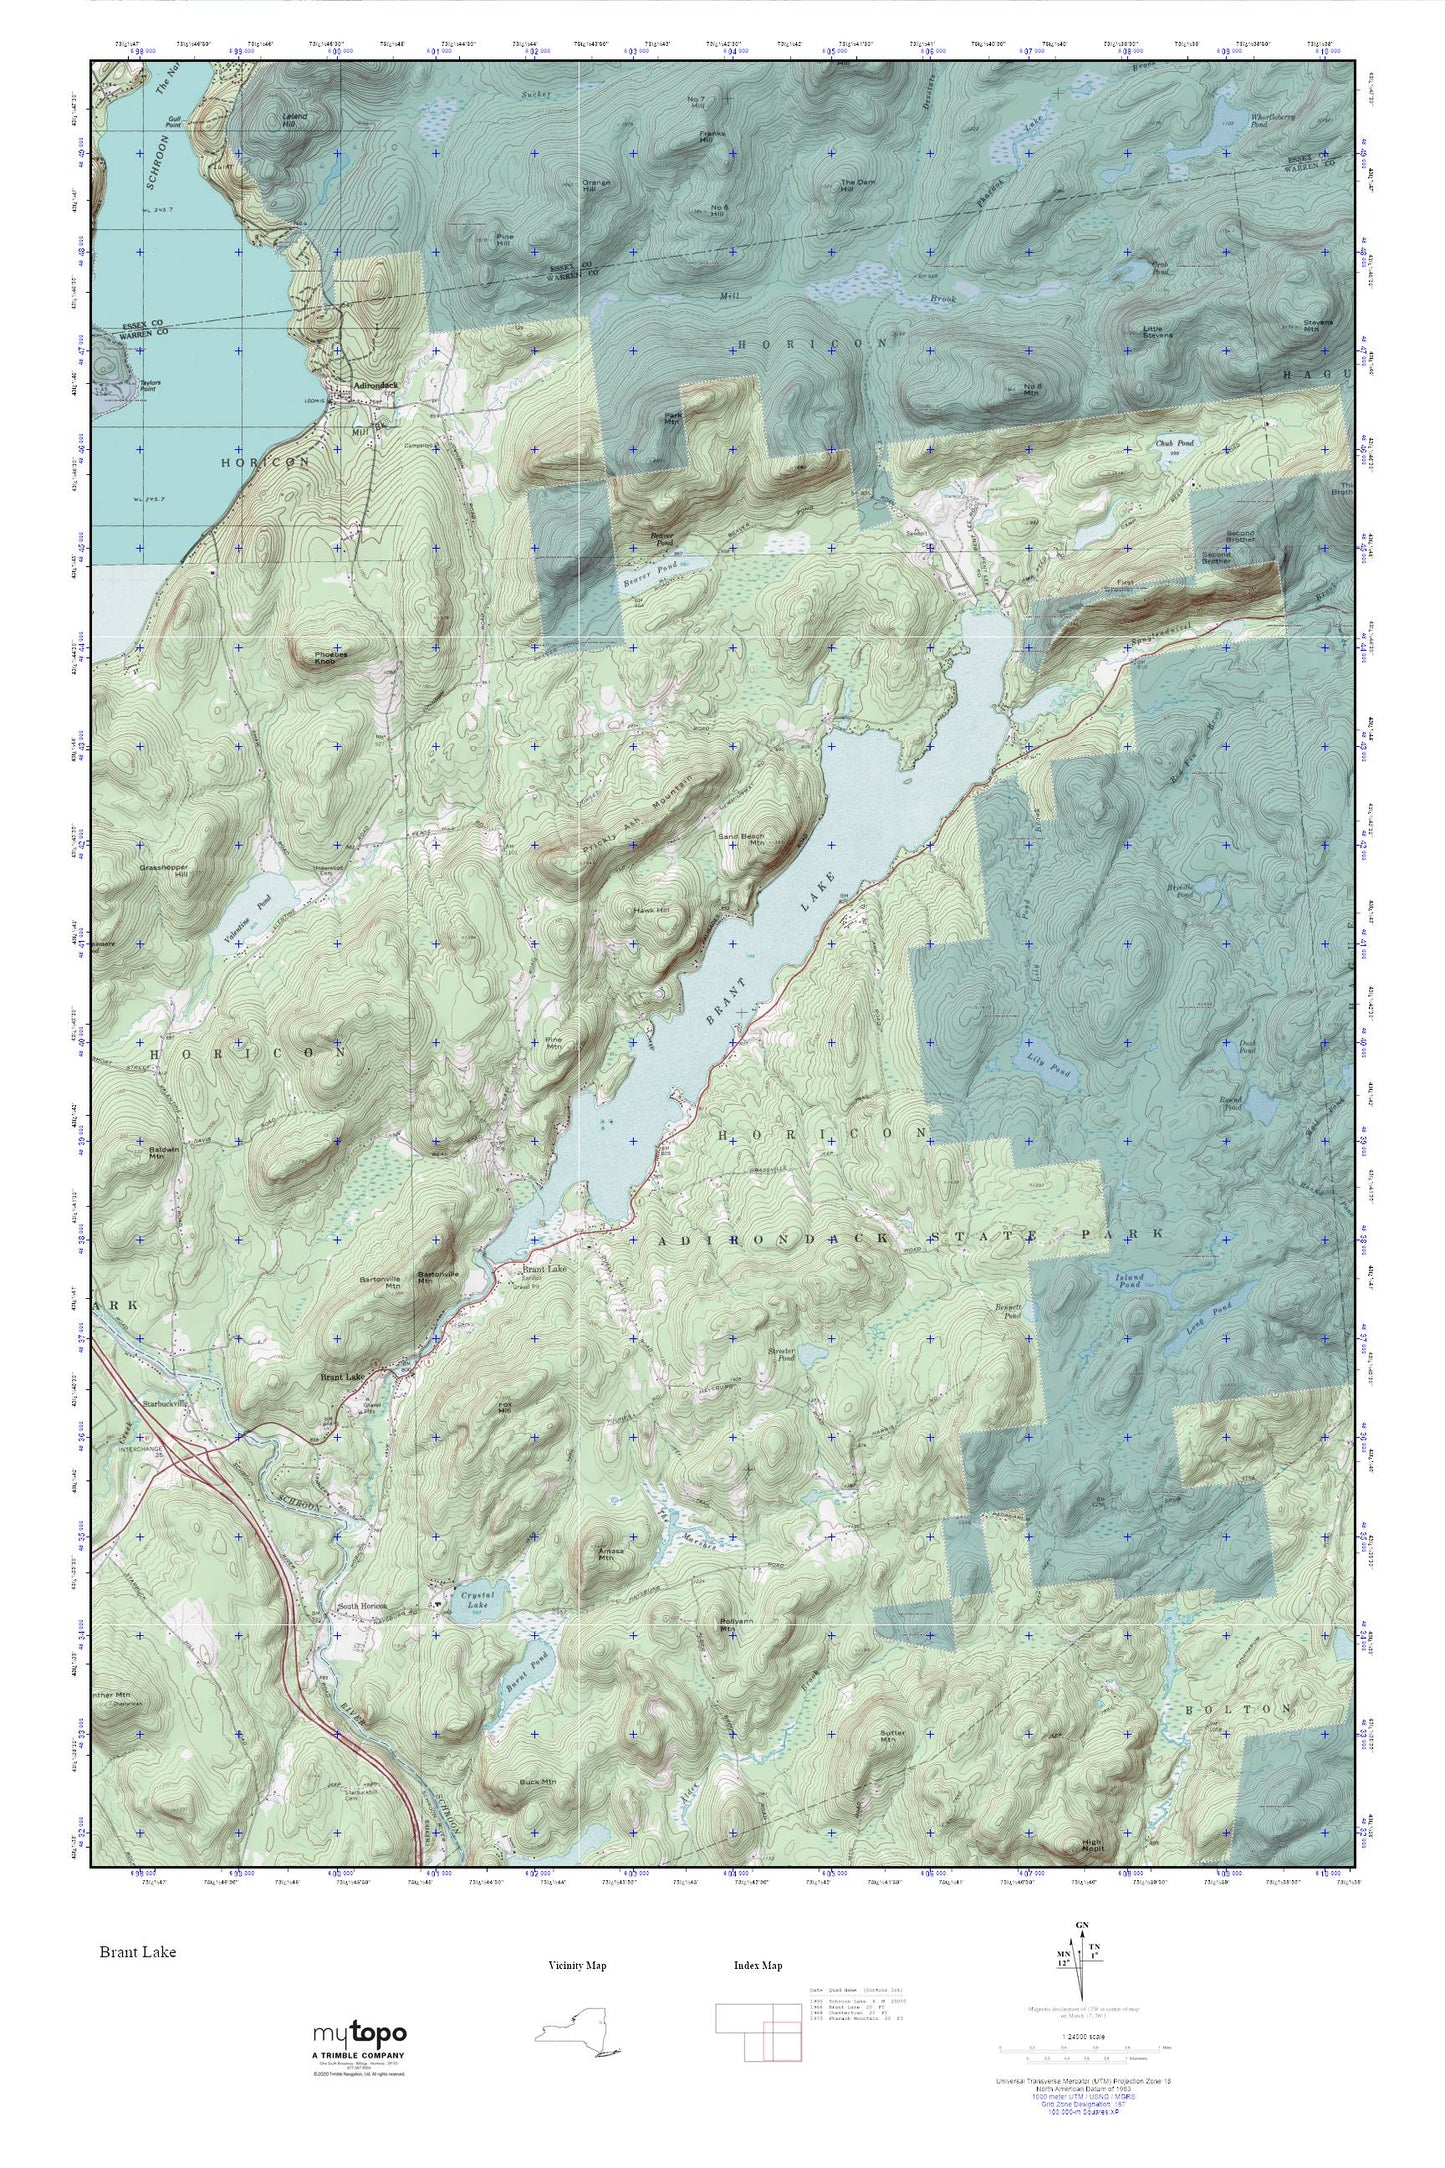 Brant Lake, N.Y. MyTopo Explorer Series Map Image